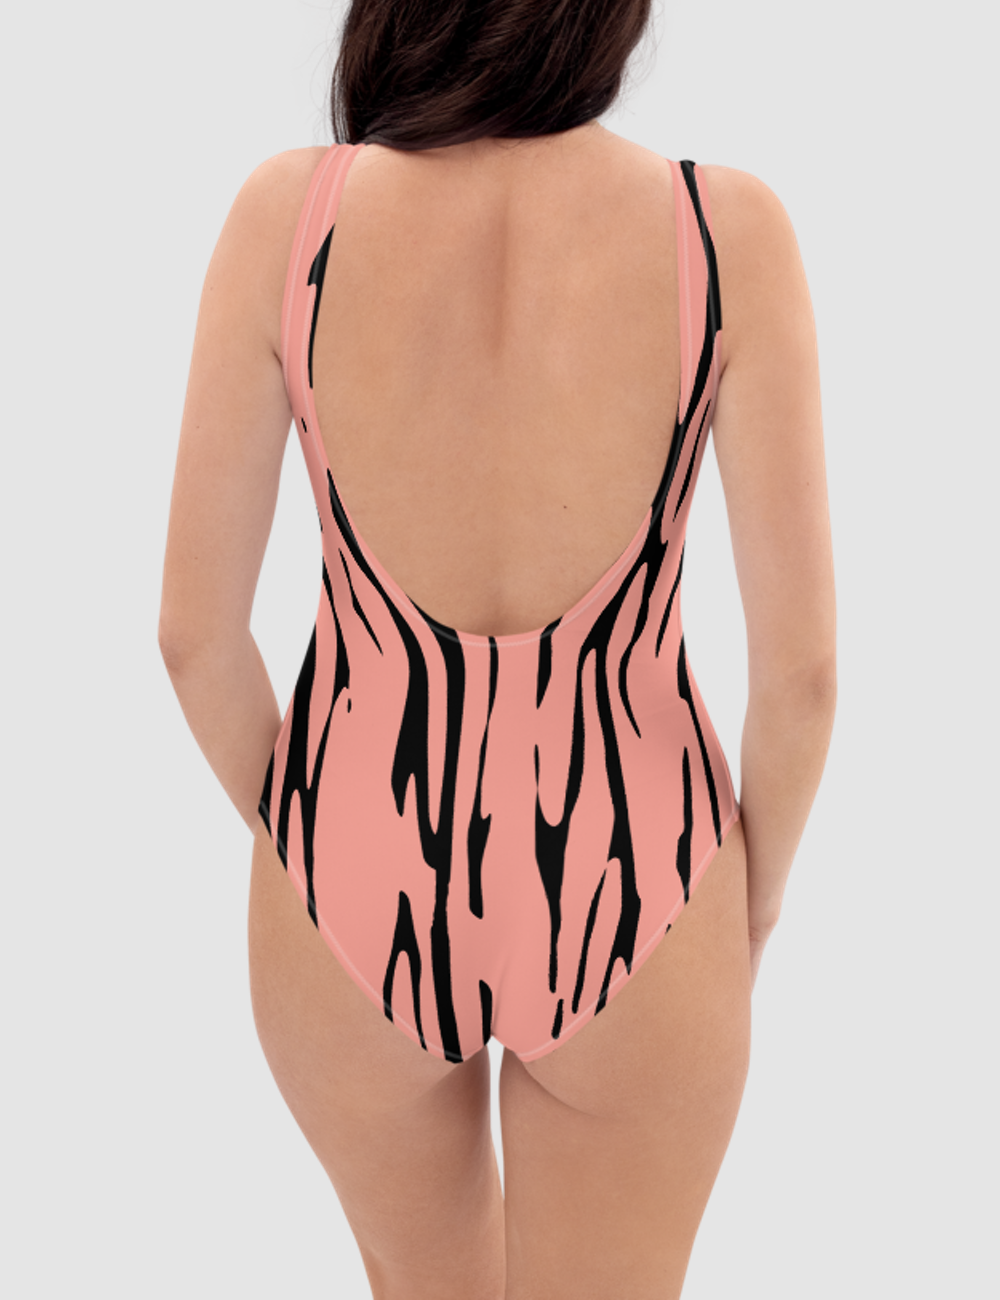 Mona Lisa Pink Striped Zebra | Women's One-Piece Swimsuit OniTakai